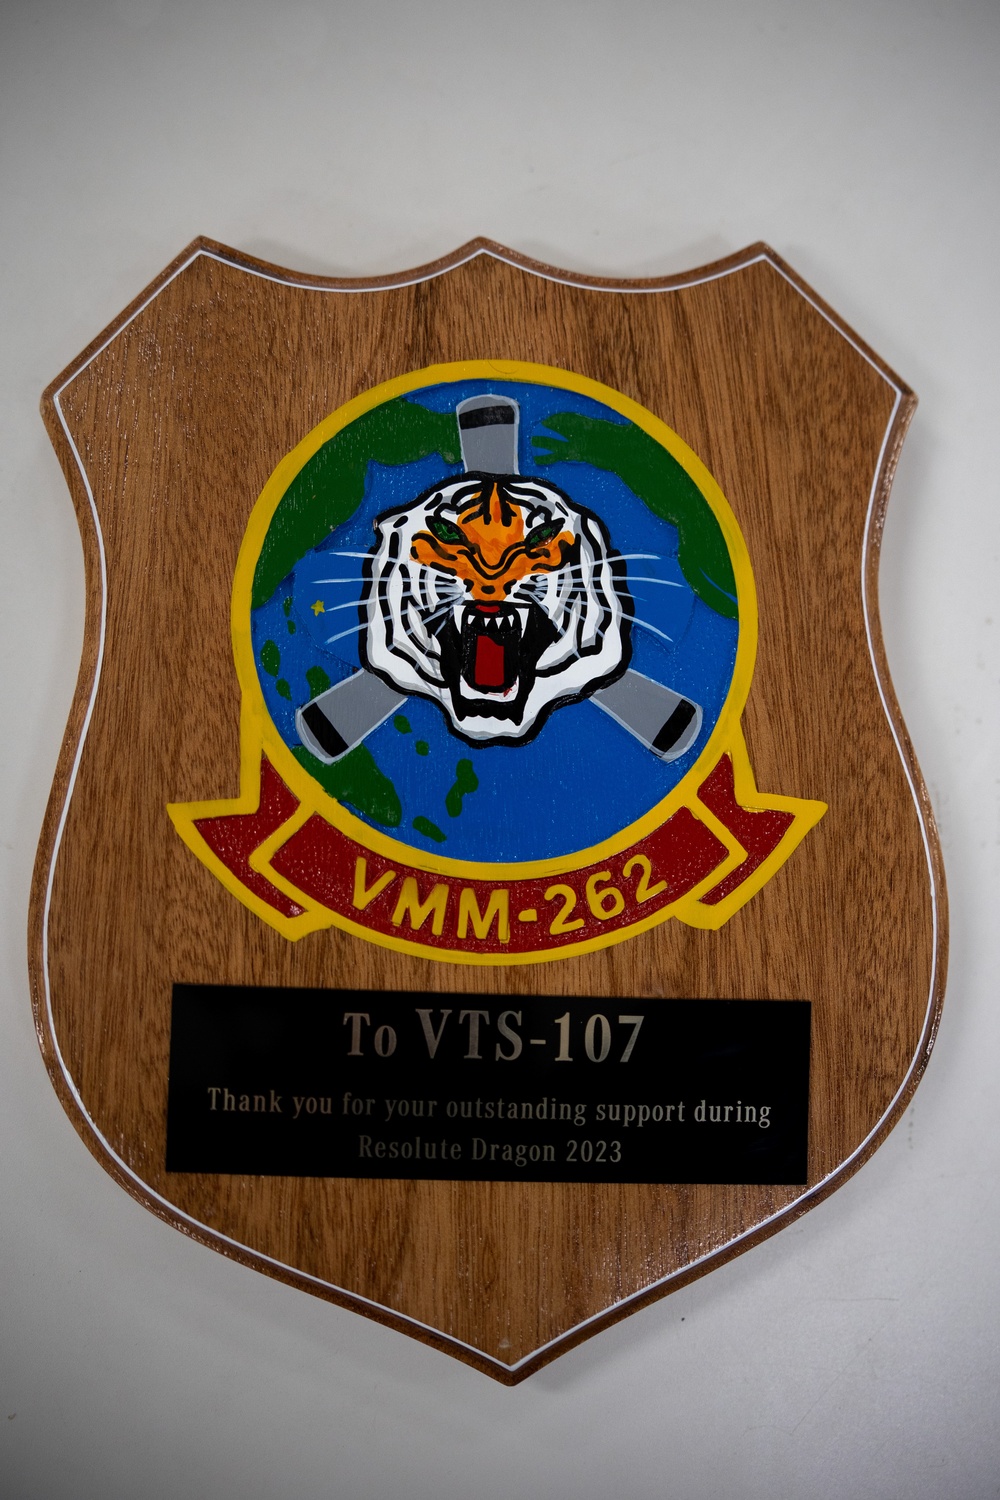 Resolute Dragon 23 FTX | VMM-262, JGSDF VTS-107 Gift Exchange